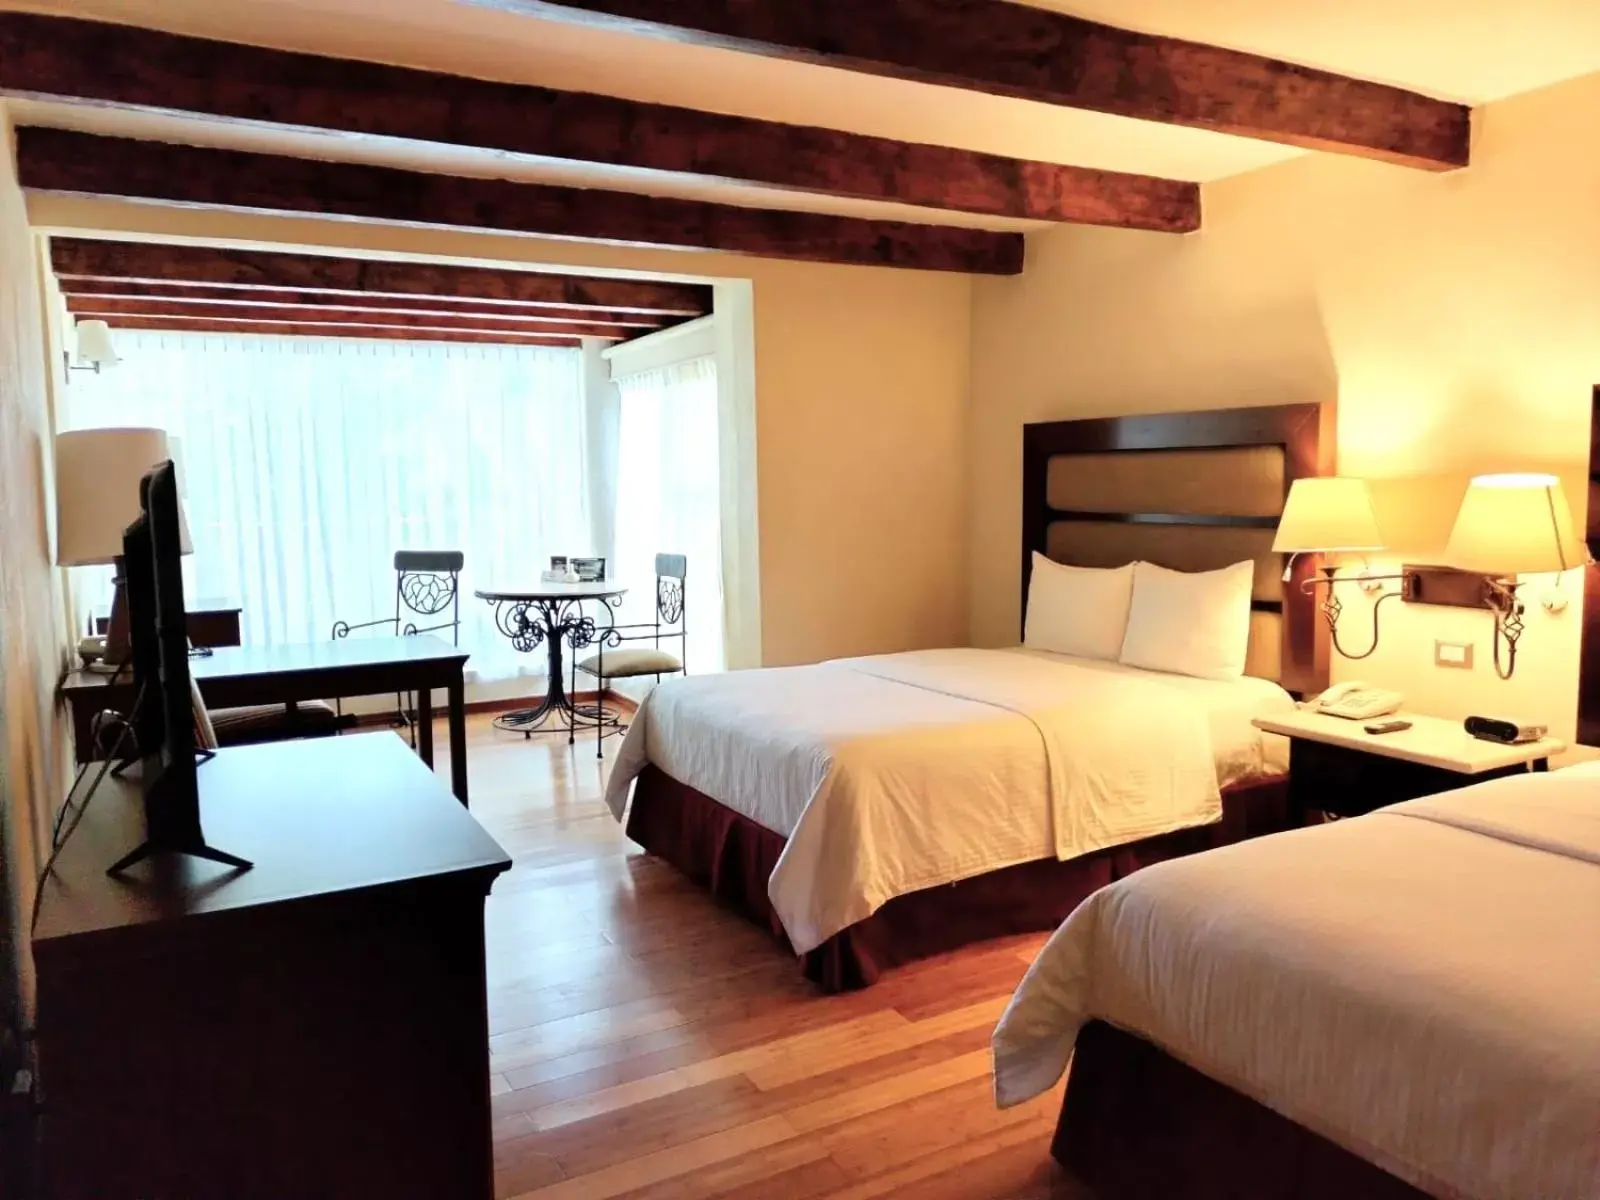 Bedroom in Hoteles Villa Mercedes San Cristobal